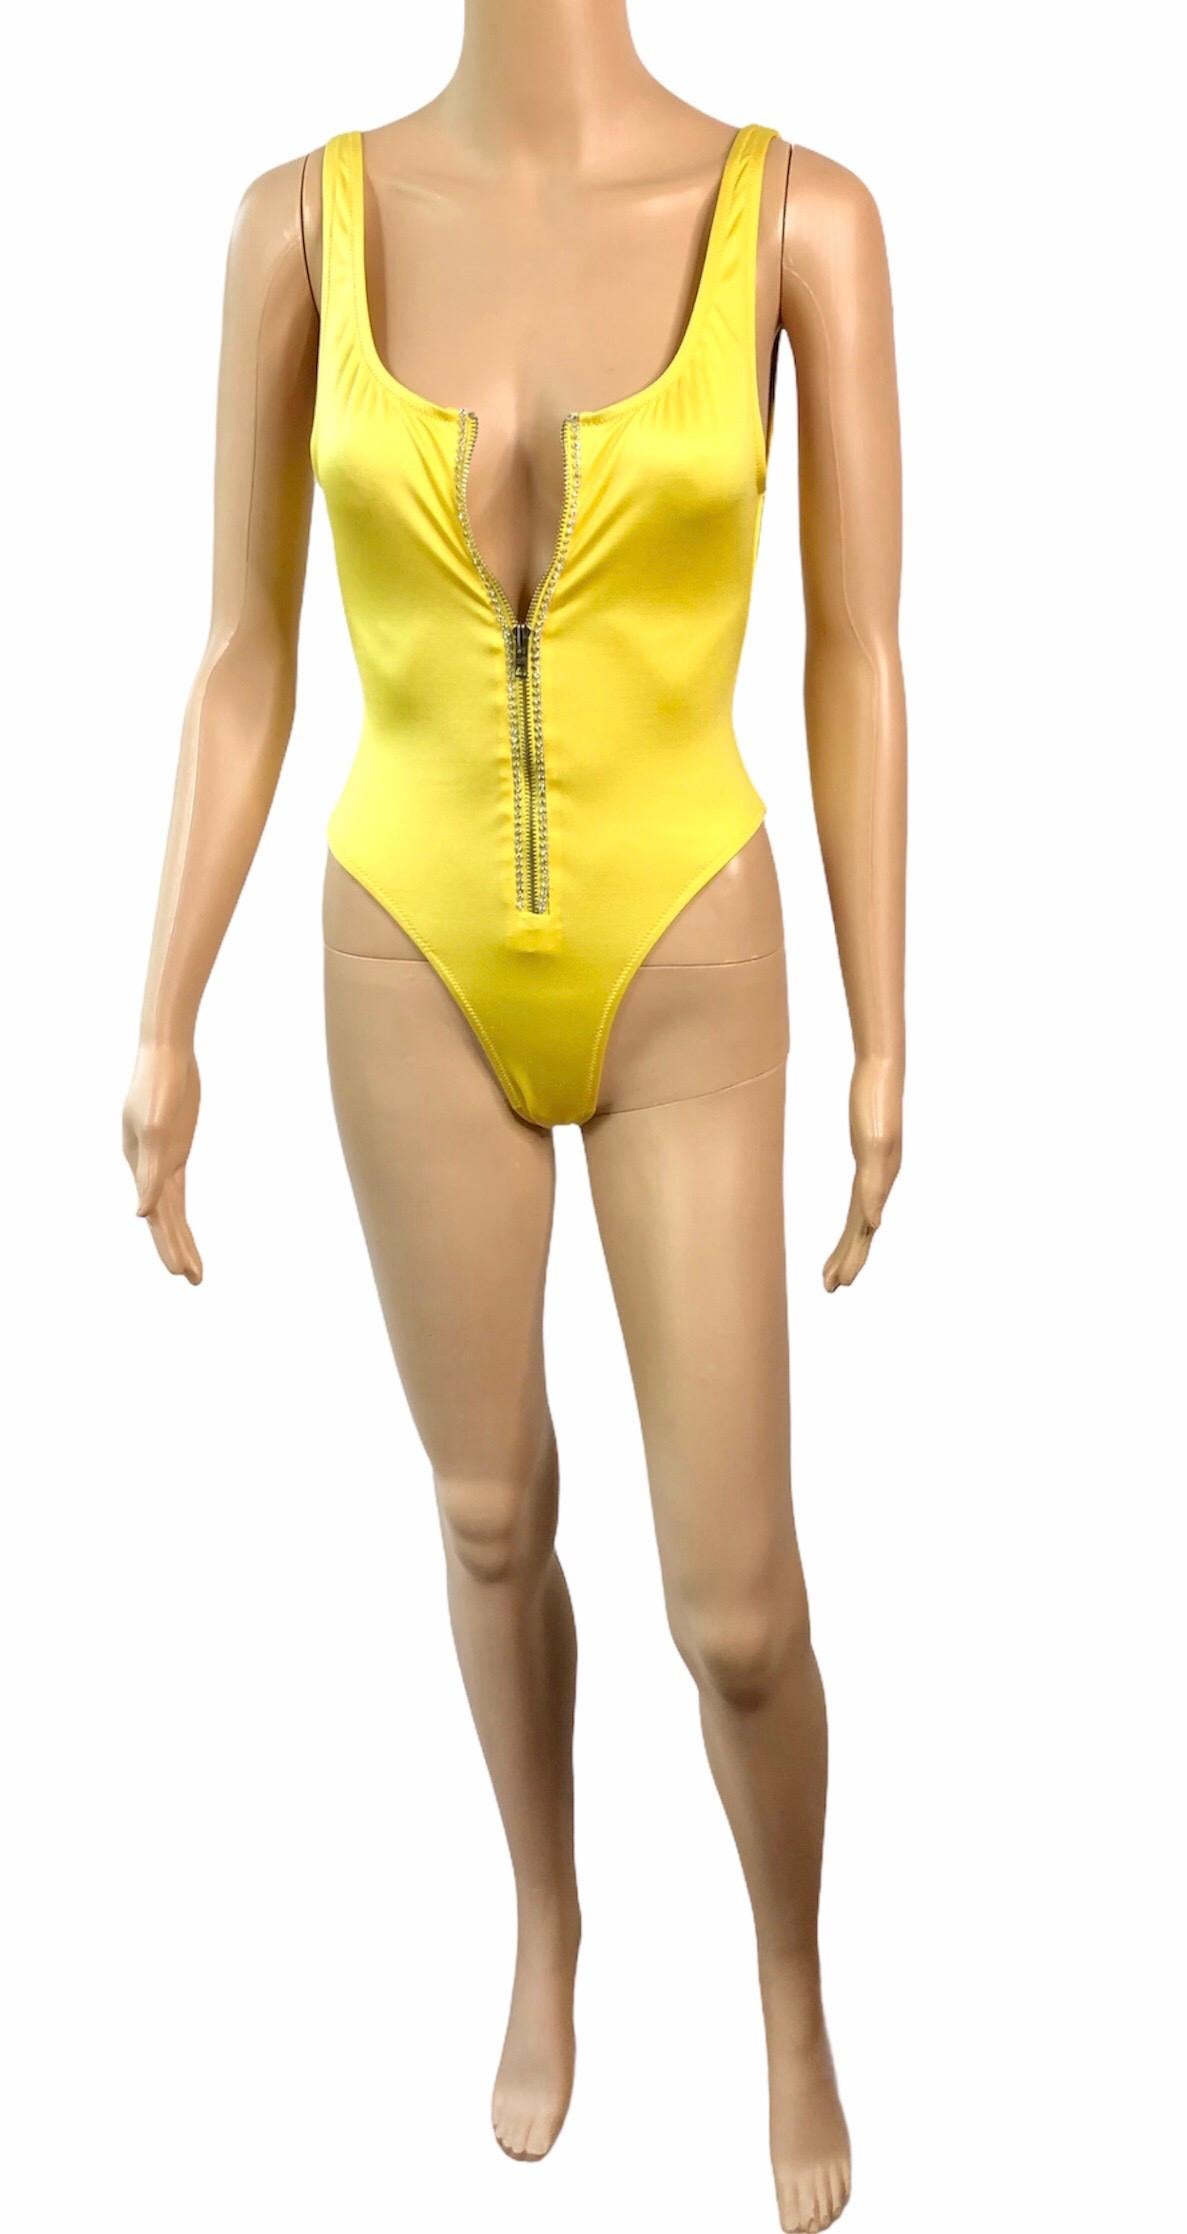 Women's or Men's Gianni Versace S/S 1996 Vintage Crystal Zipper Yellow Bodysuit Swimwear Swimsuit For Sale